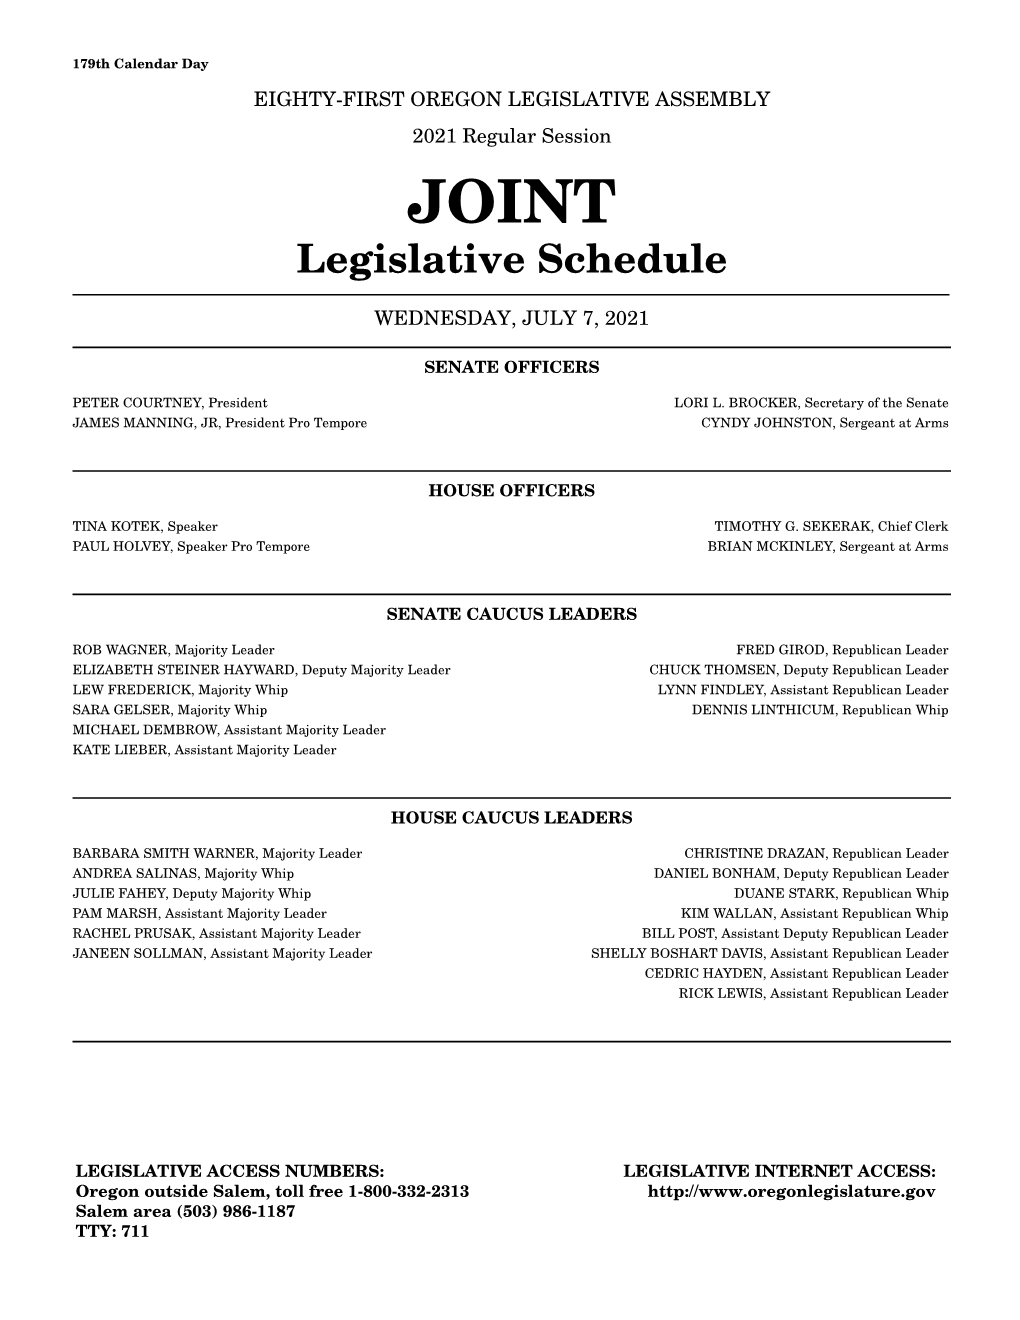 JOINT Legislative Schedule